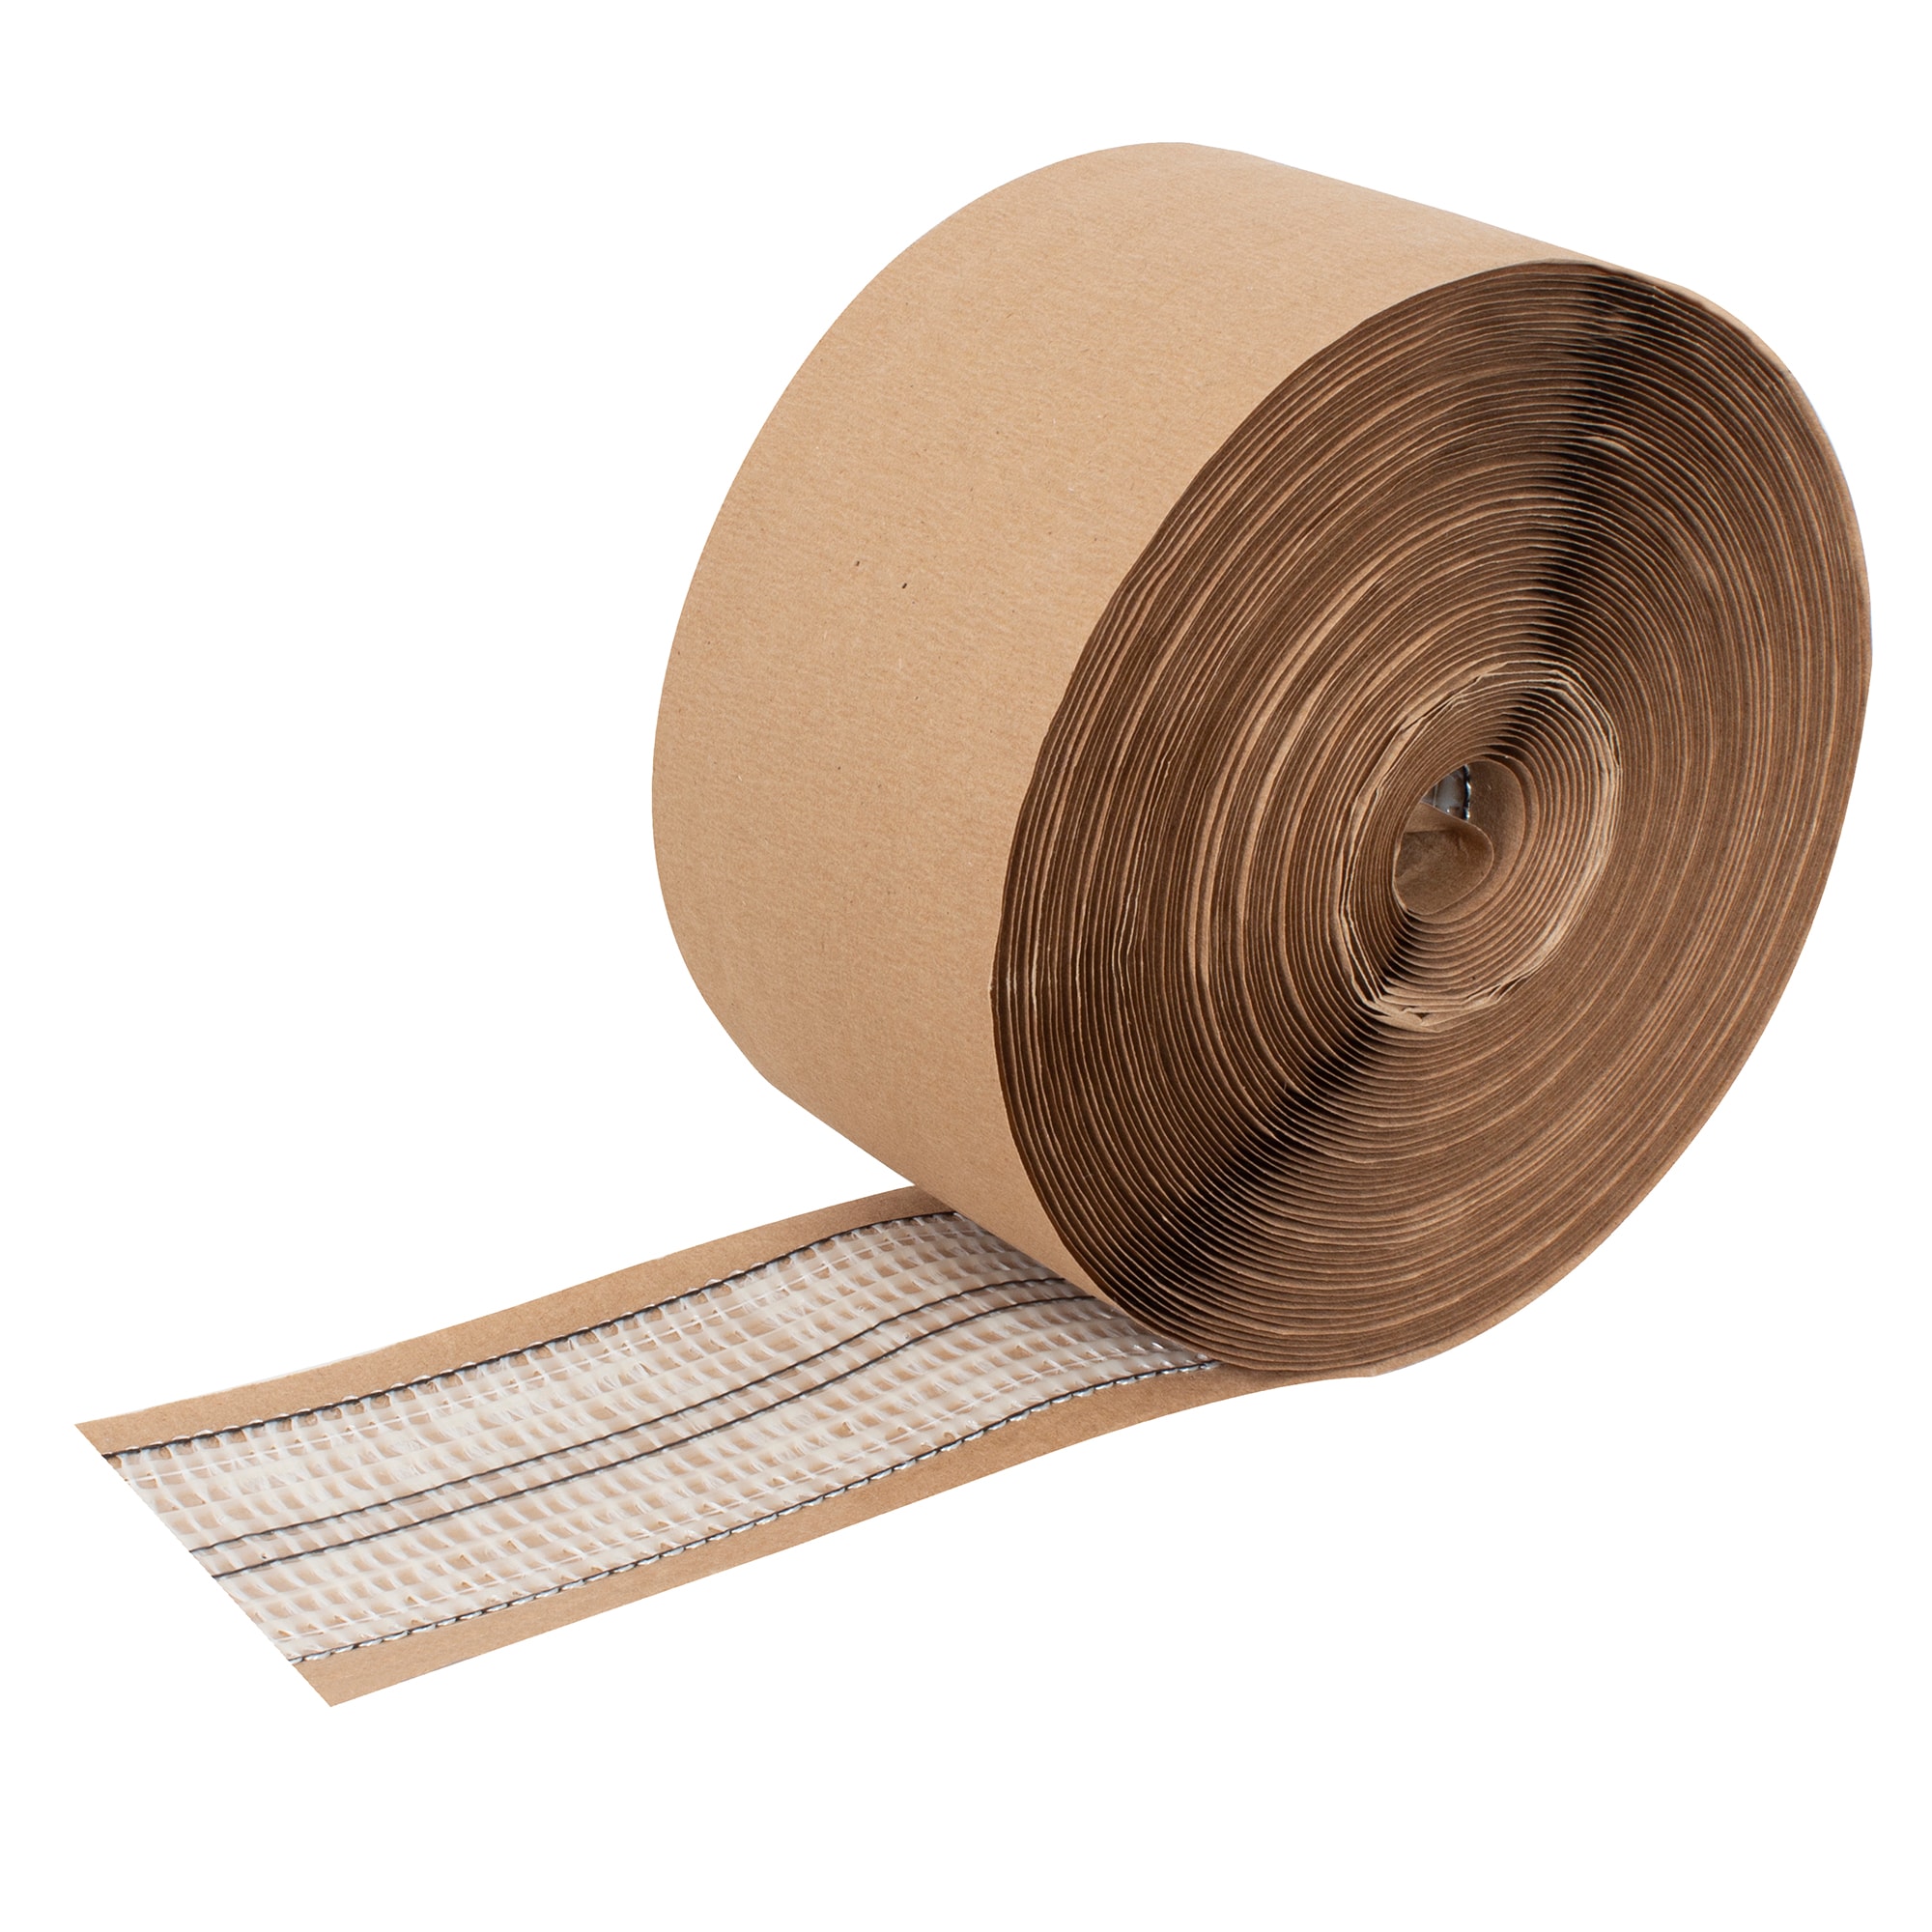 12 Non Slip Rug Grippers Carpet Mat Grip Set Floor Pad Tape Adhesive Anti  Skid, 1 - Kroger